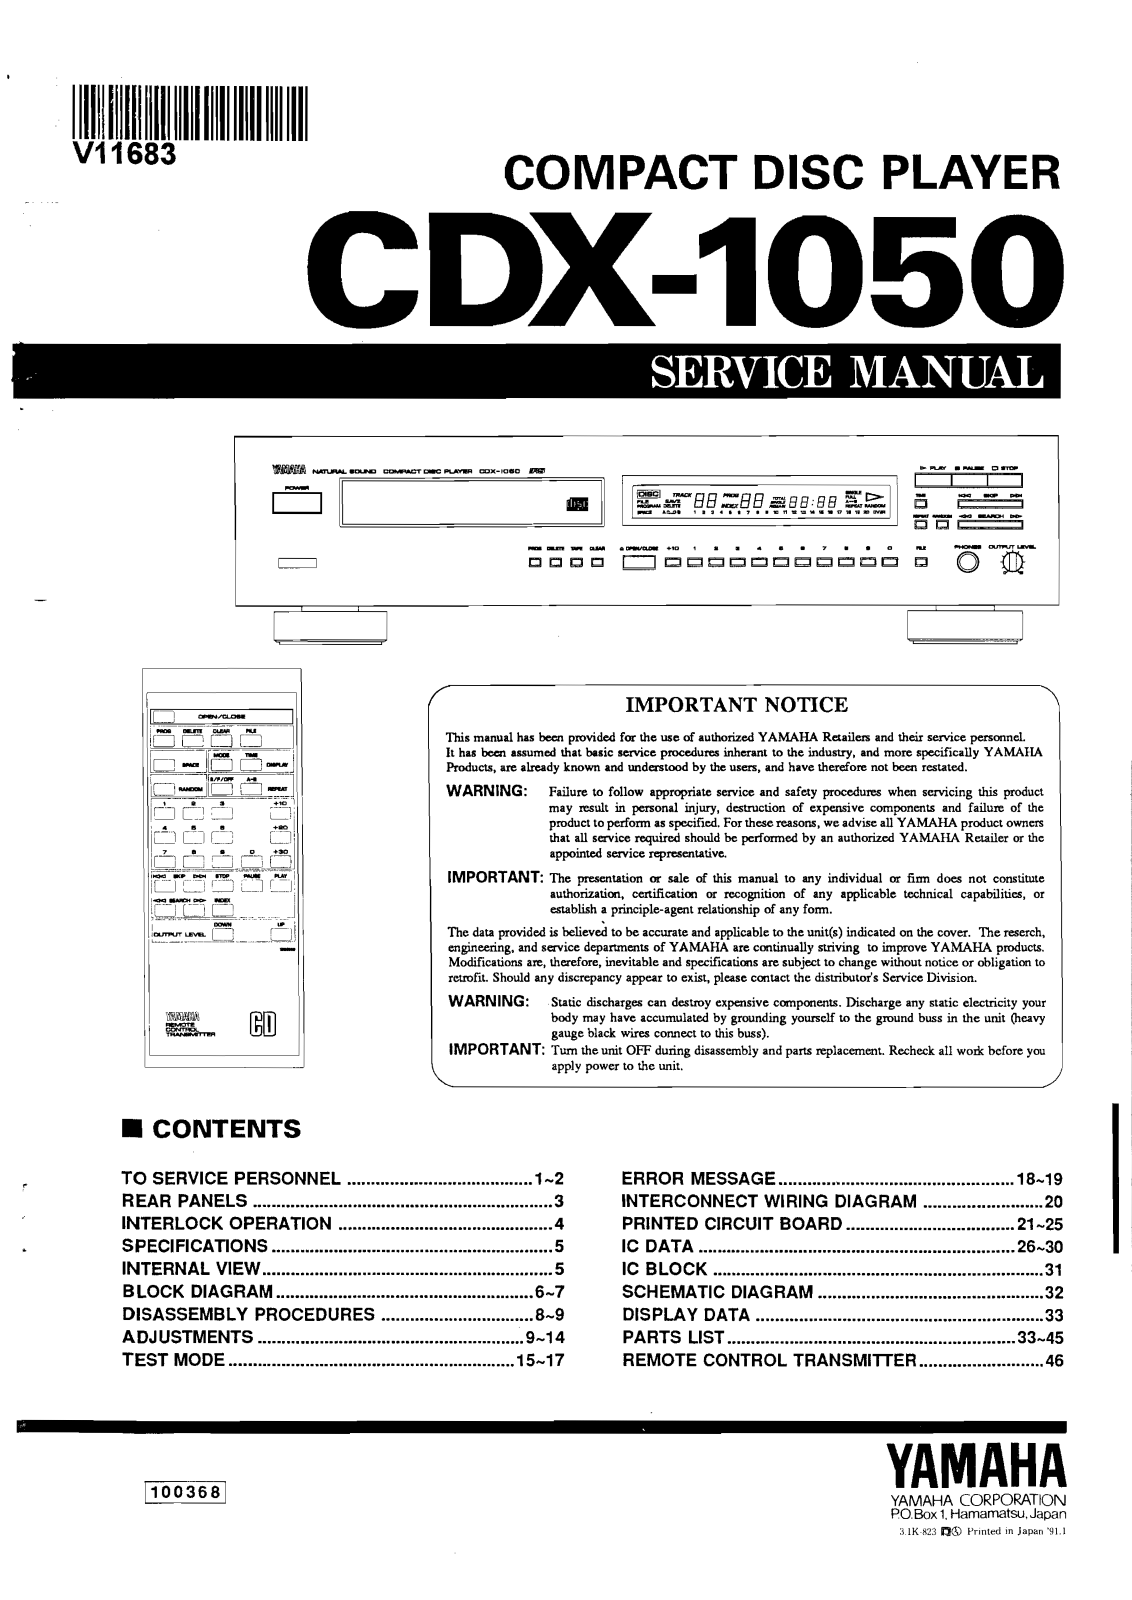 Yamaha CDX-1050 Service Manual